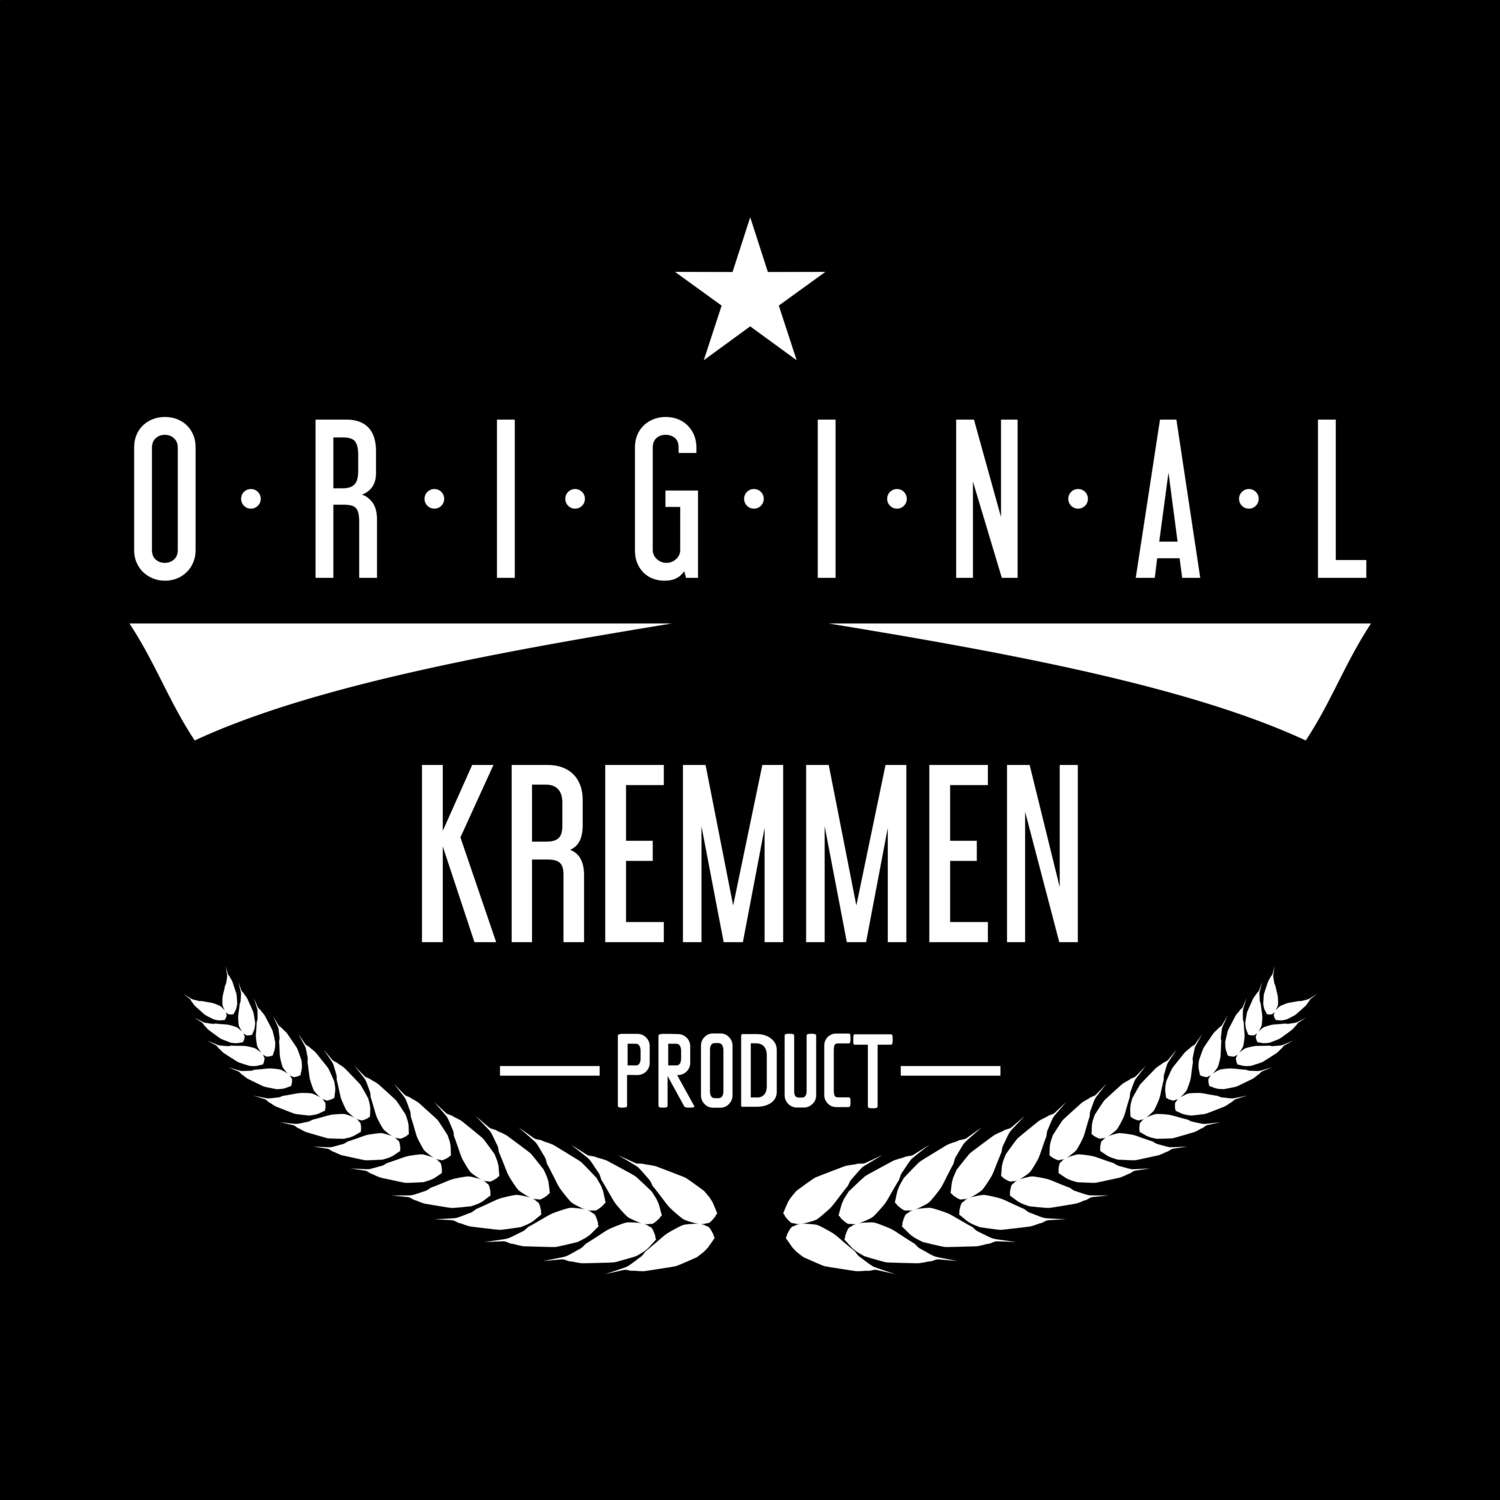 Kremmen T-Shirt »Original Product«